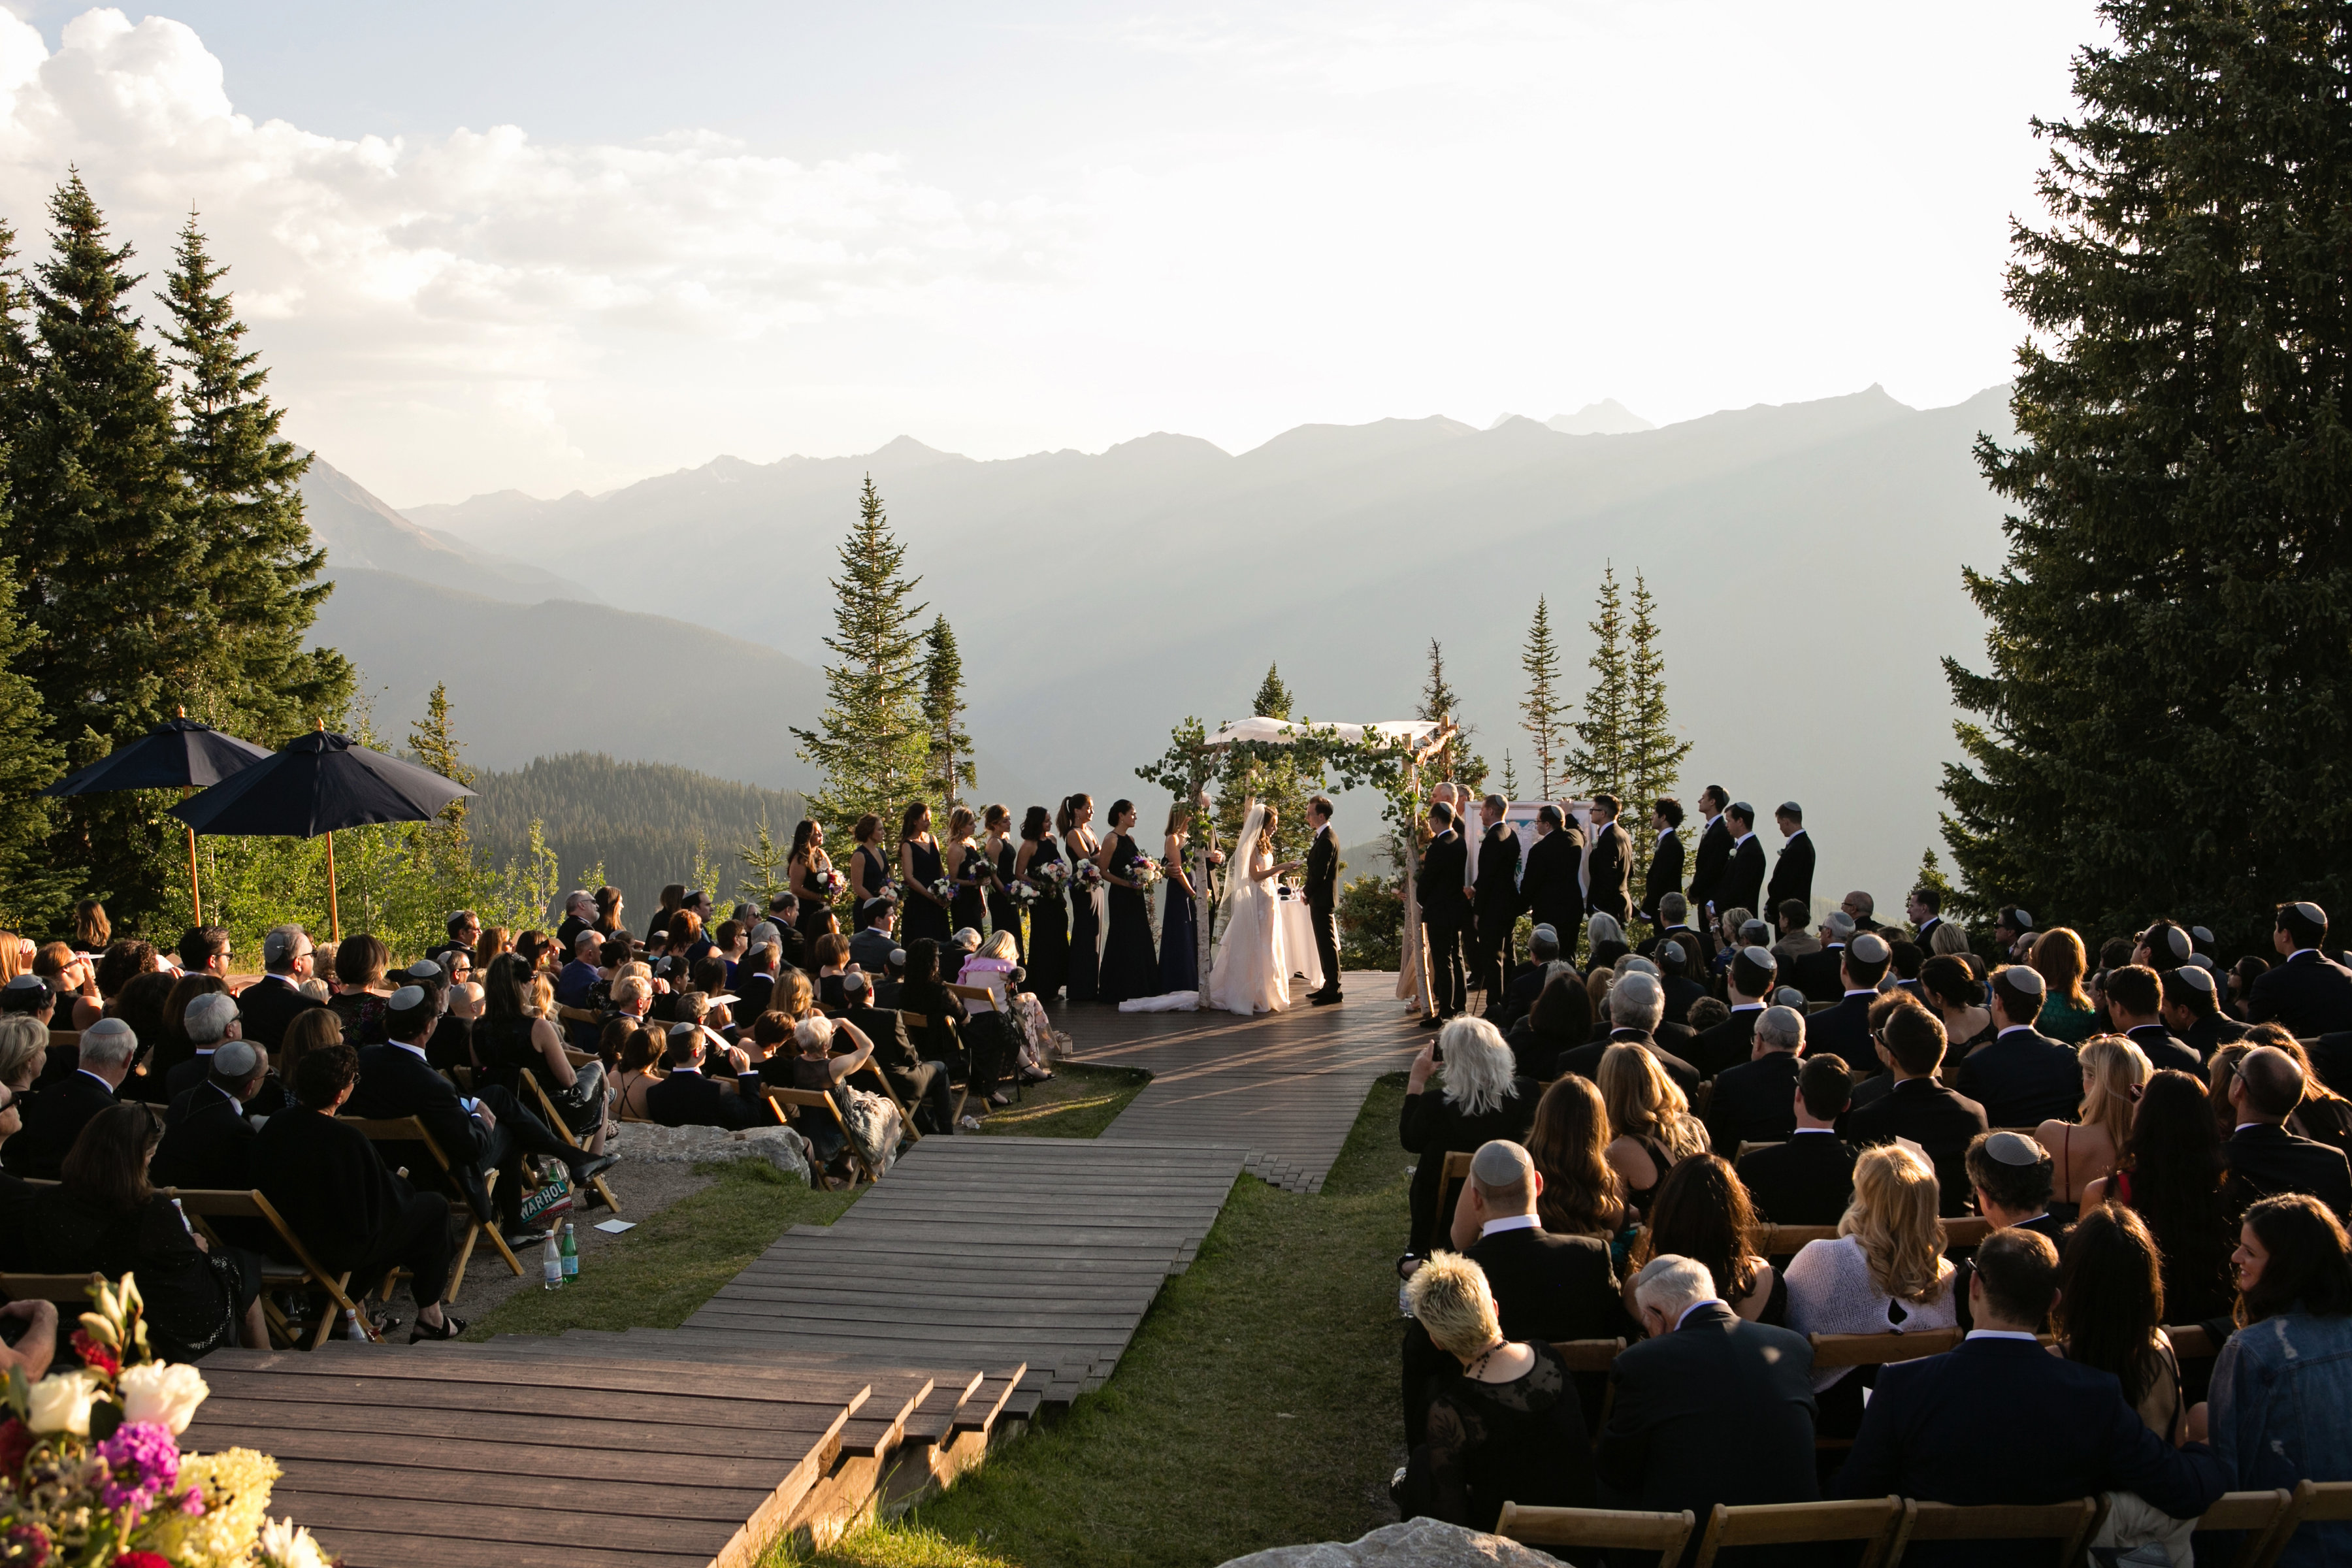 https://s8174.pcdn.co/wp-content/uploads/2018/09/mountain-wedding-ceremony.jpg